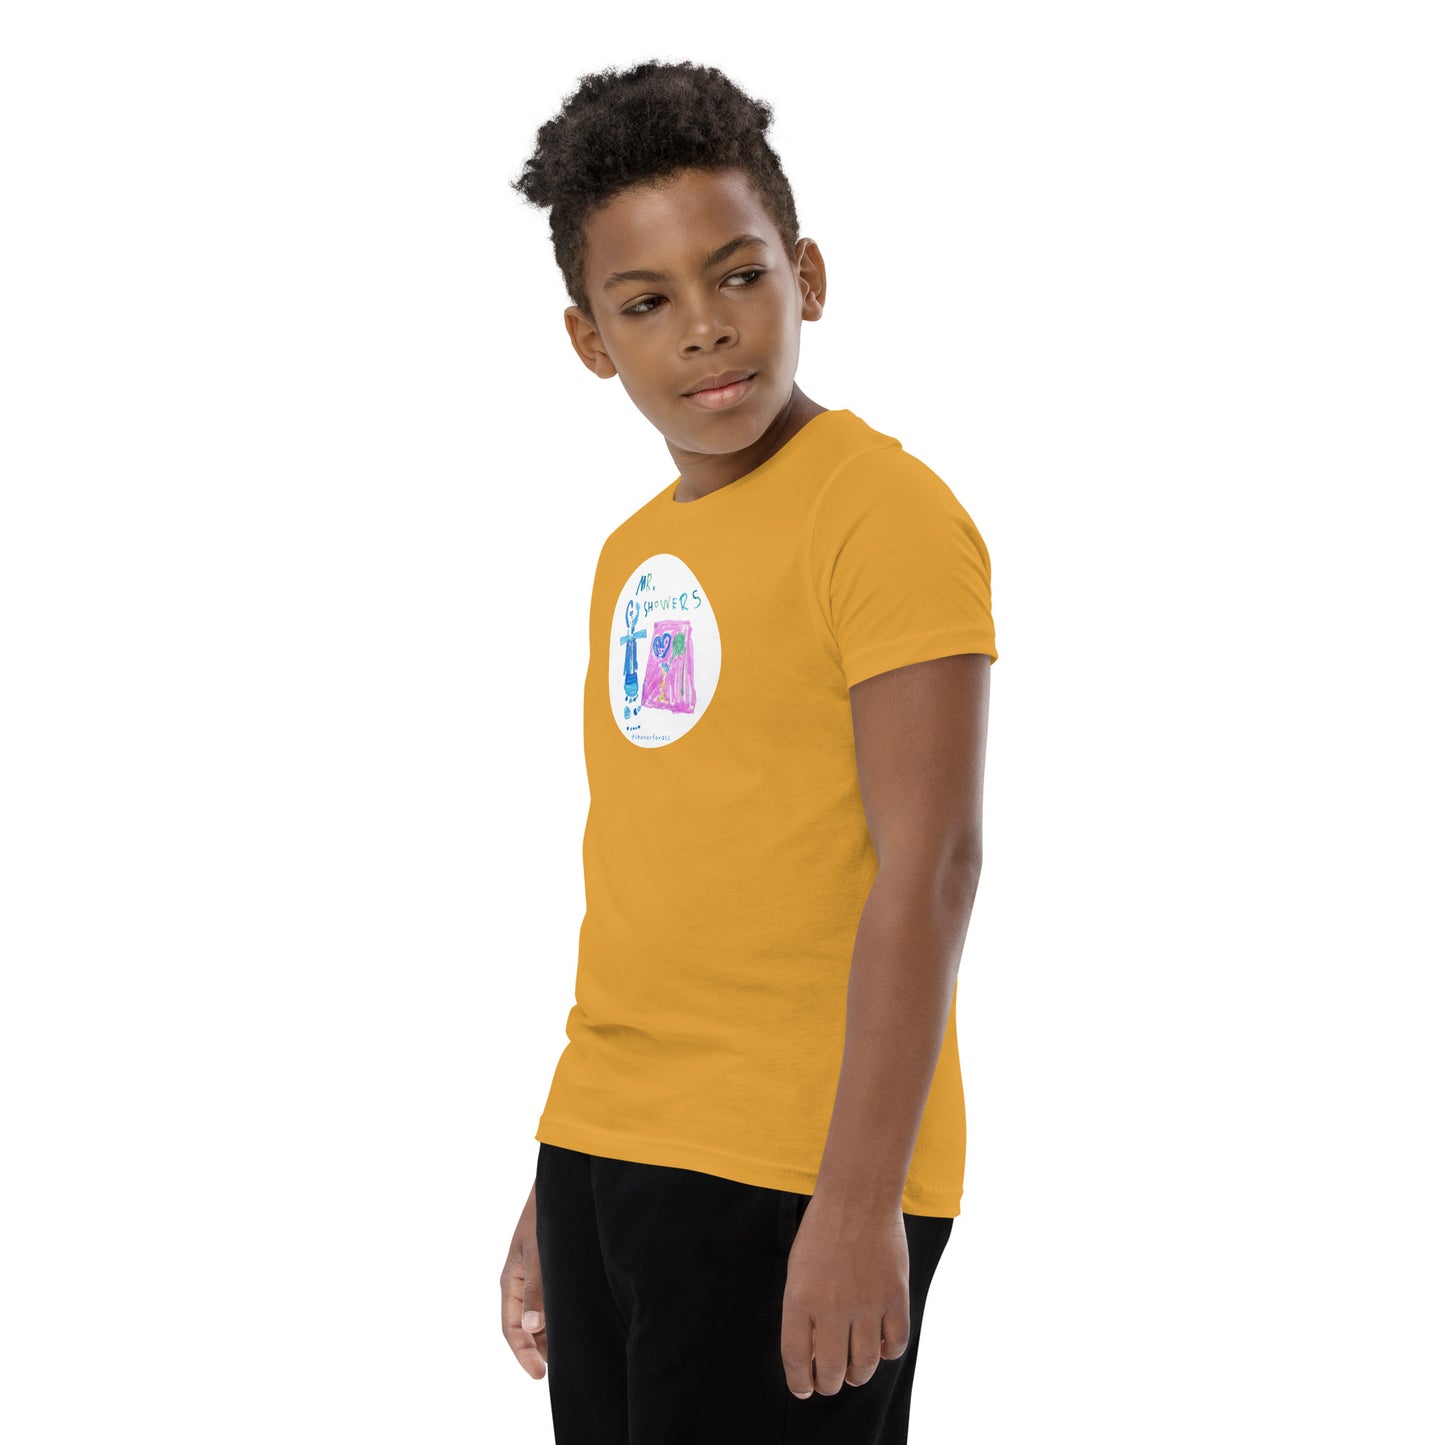 Youth Mr. Showers T-Shirt - Kids Create